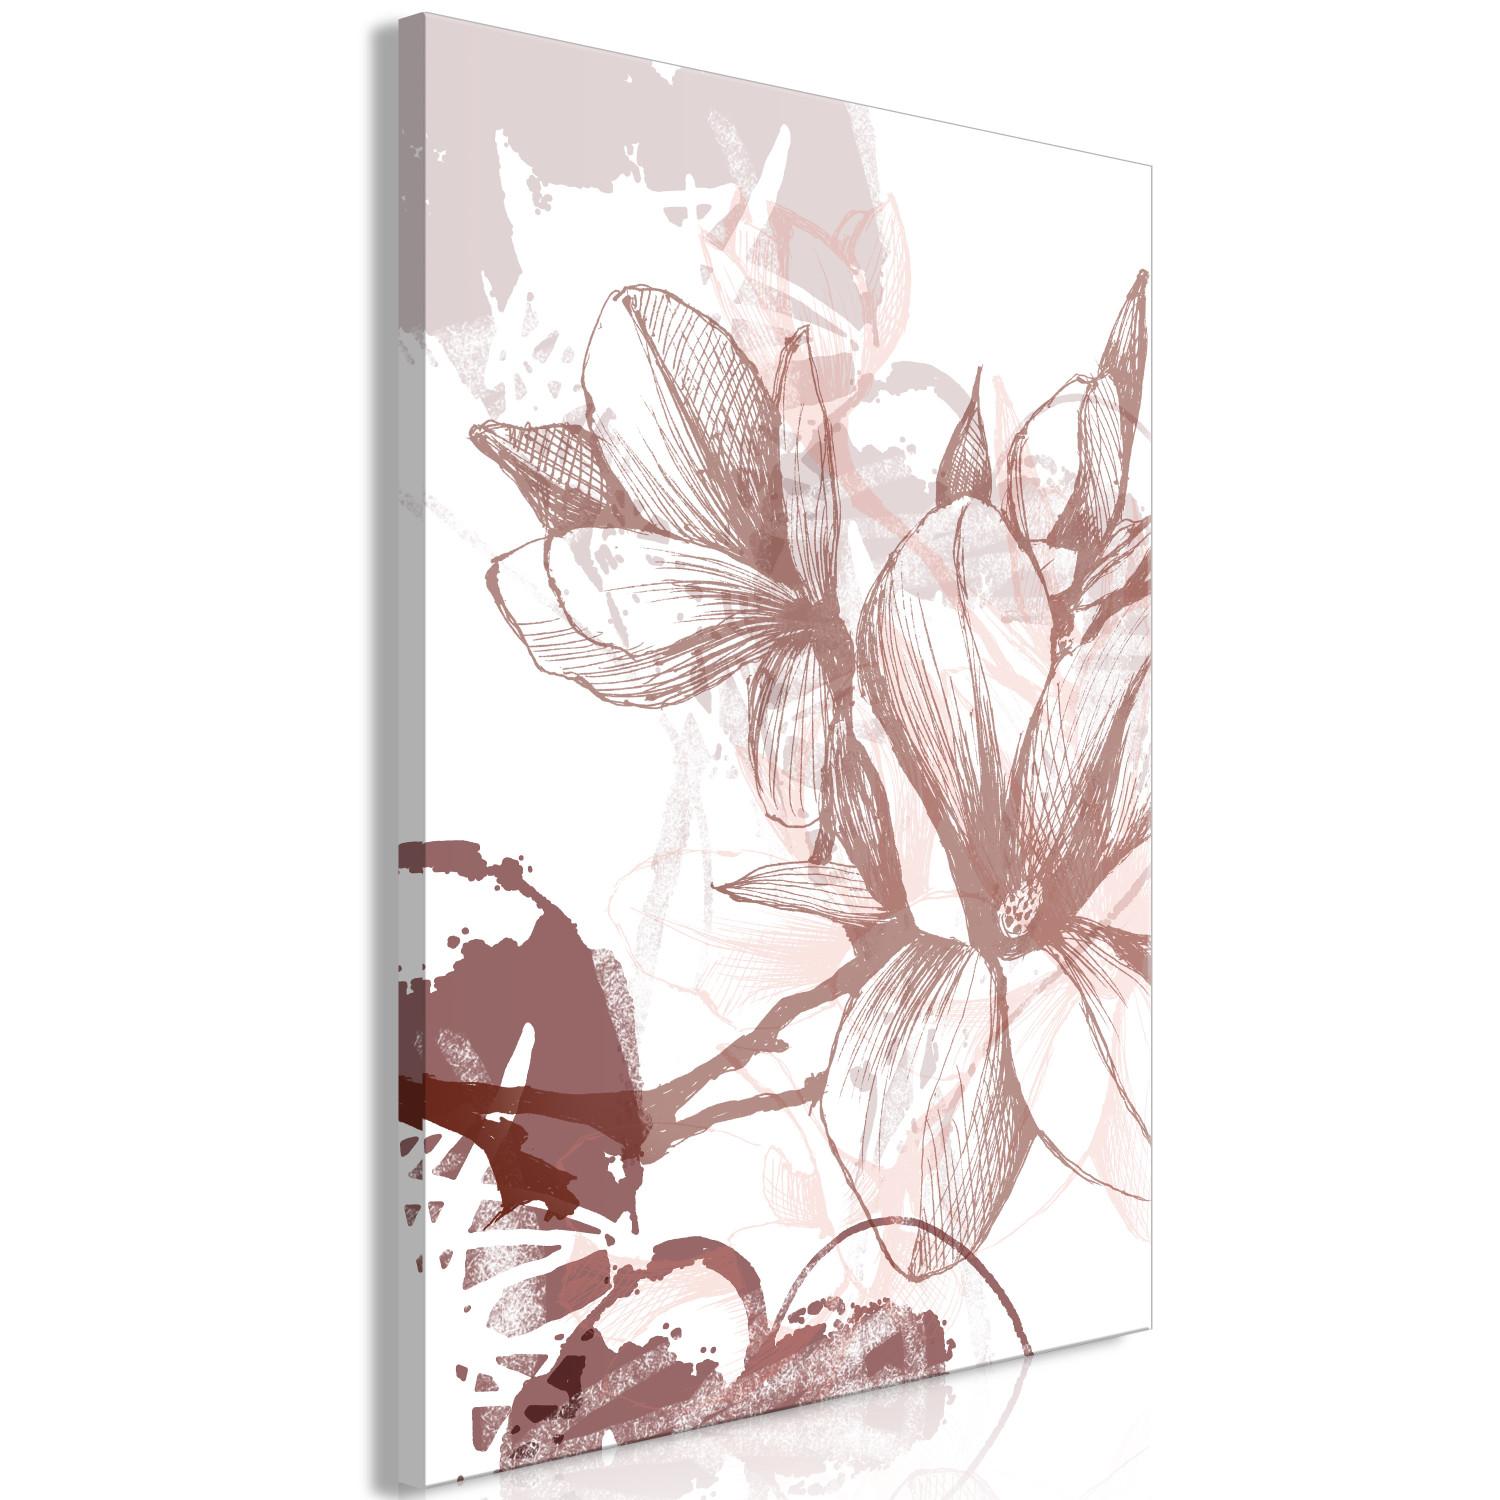 Canvas Magnolia engraving - a vintage illustration of a floral pattern